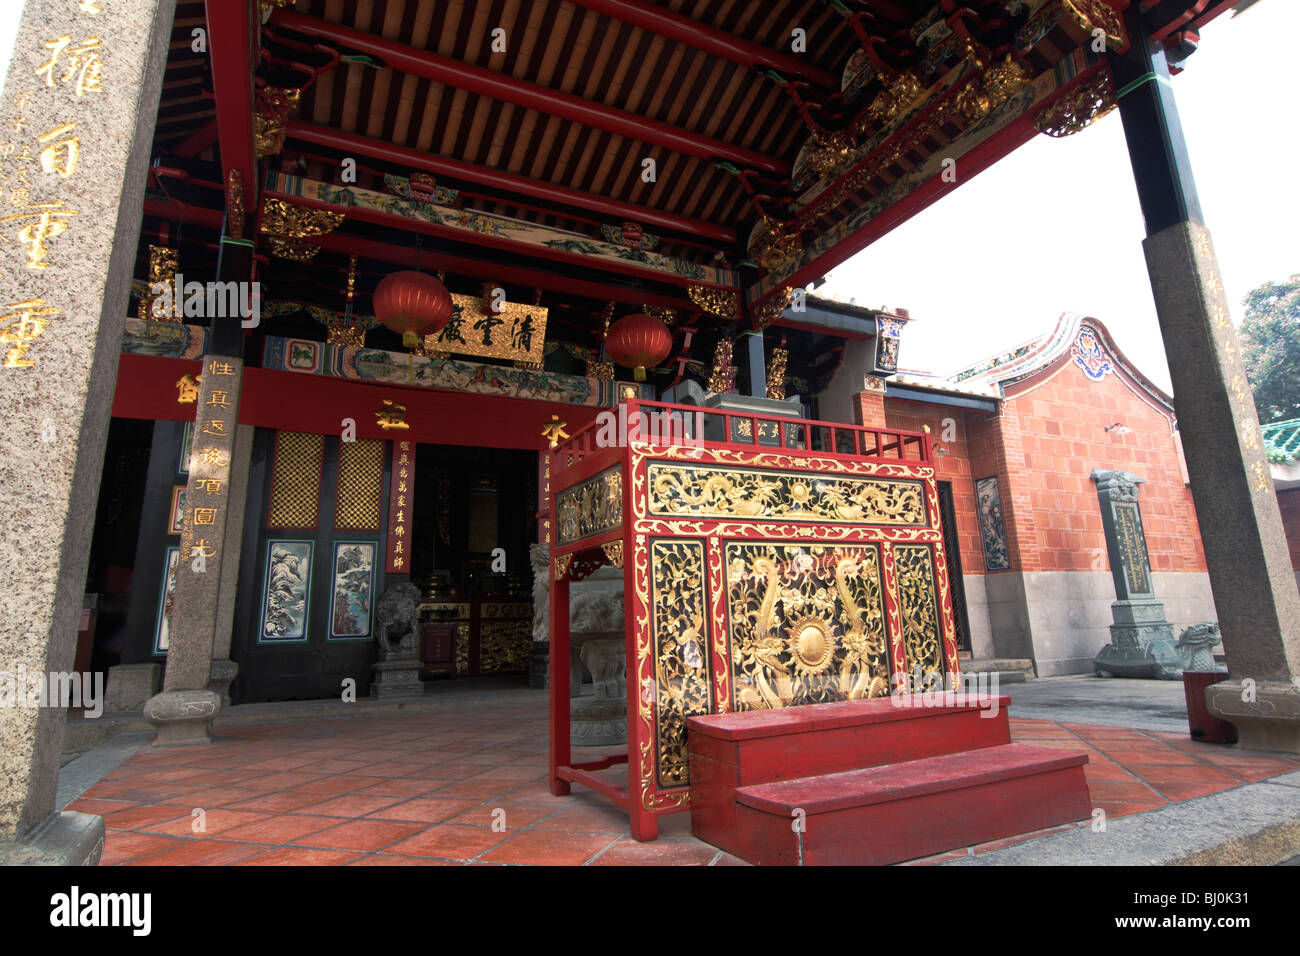 Main entrance into the Snake Temple at Penang, Malaysia Stock Photo